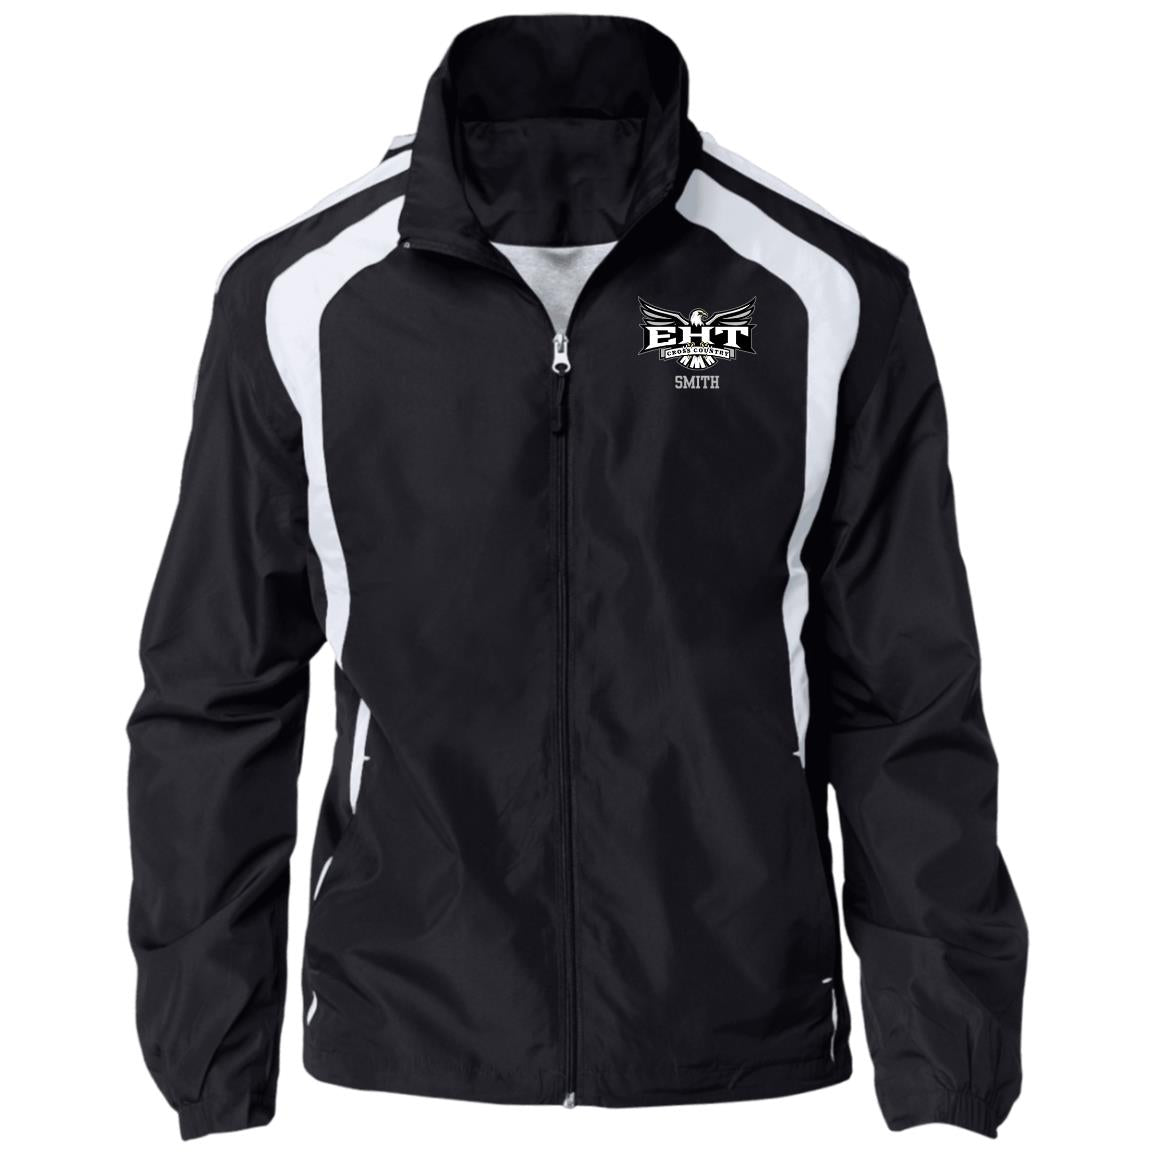 EHT XC Jersey-Lined Raglan Jacket